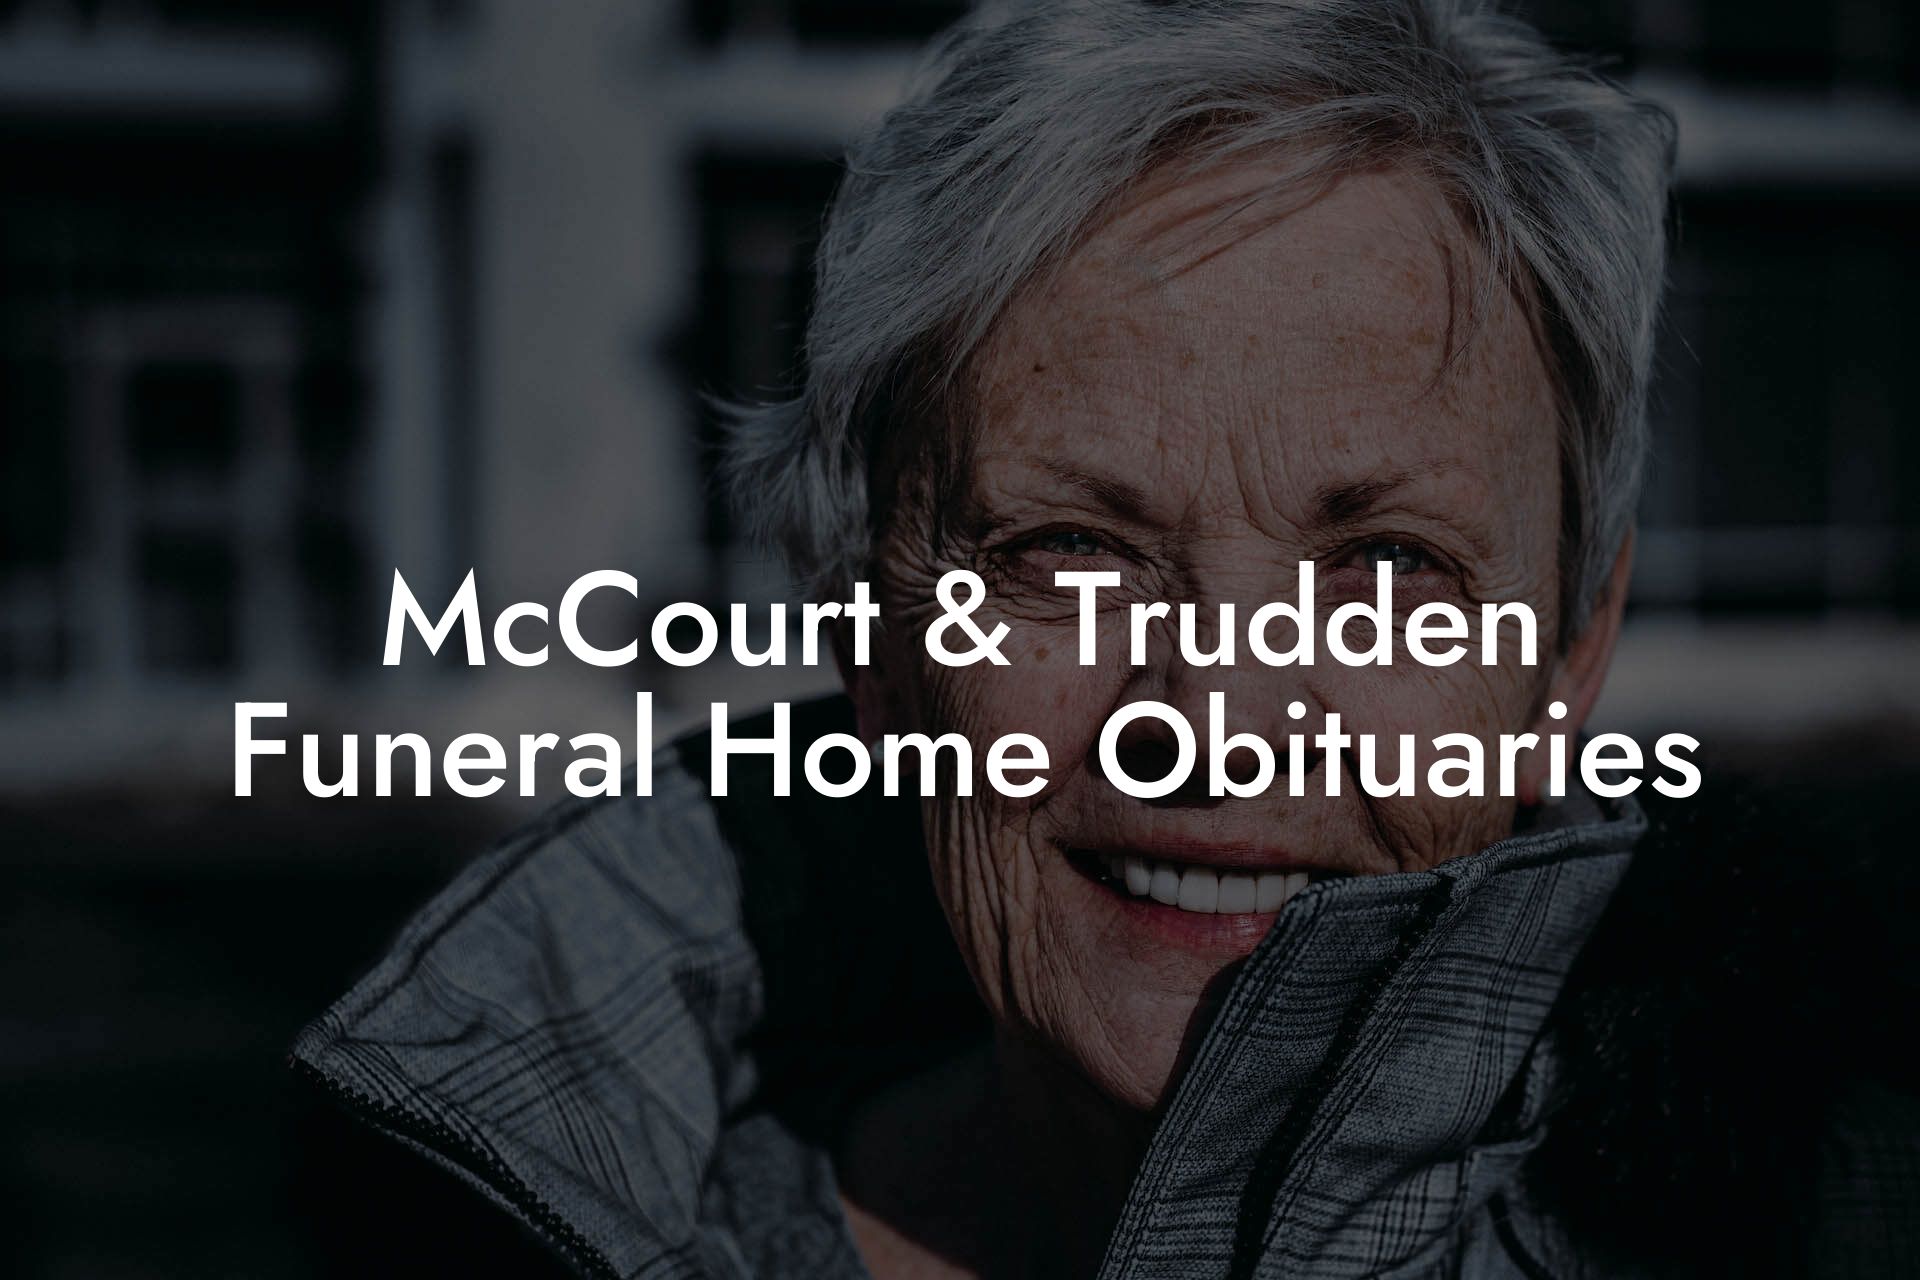 McCourt & Trudden Funeral Home Obituaries